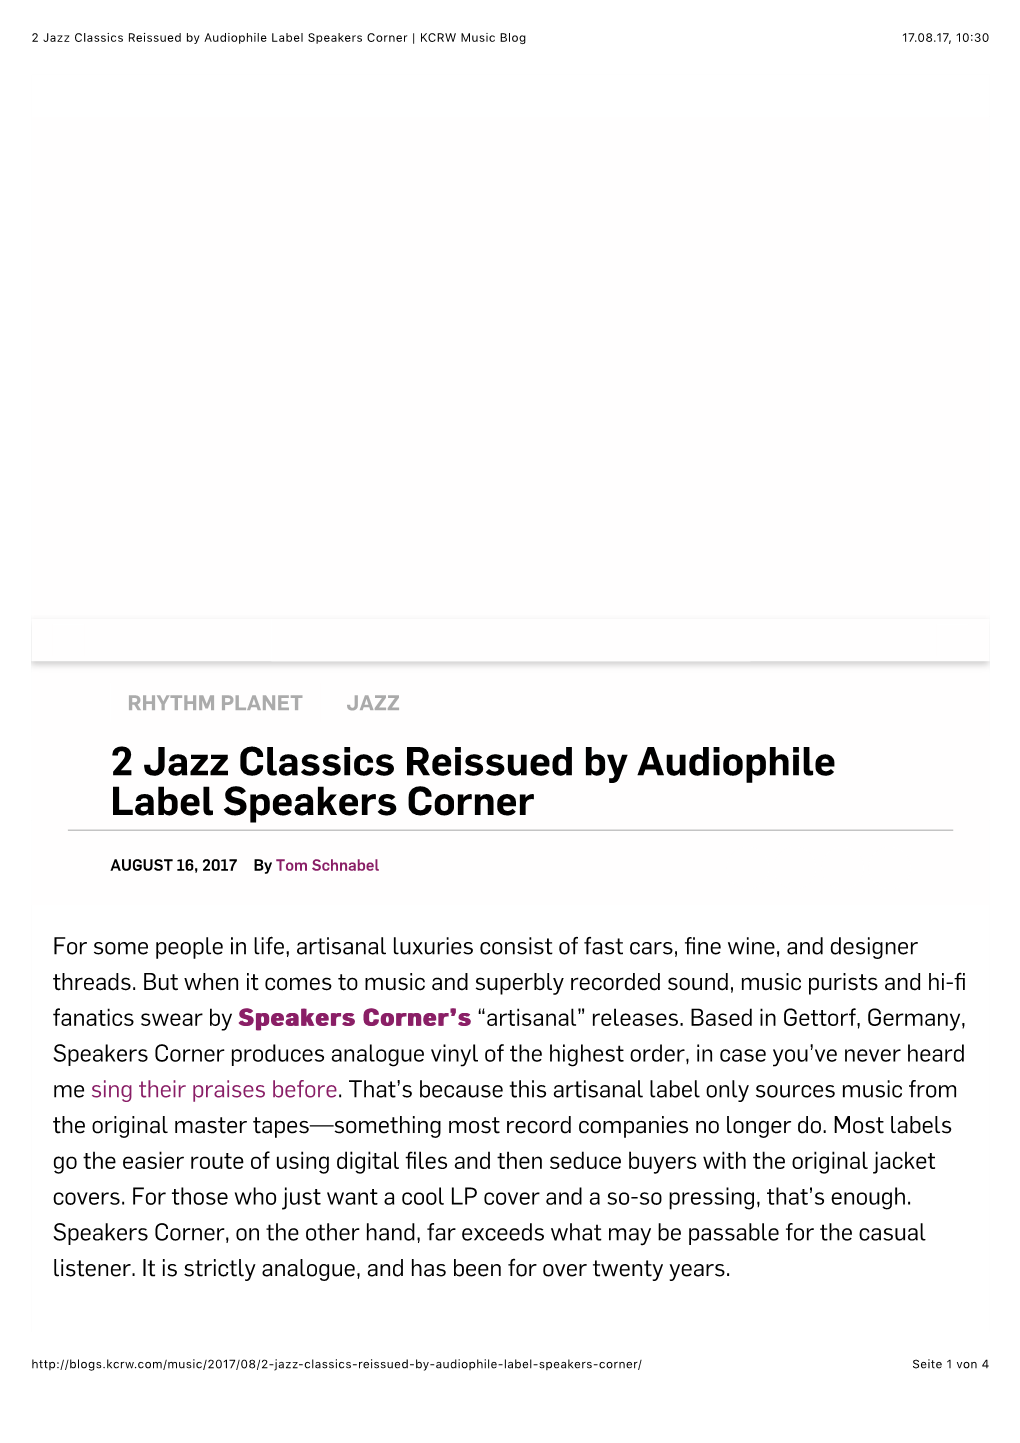 RHYTHM PLANET JAZZ 2 Jazz Classics Reissued by Audiophile Label Speakers Corner